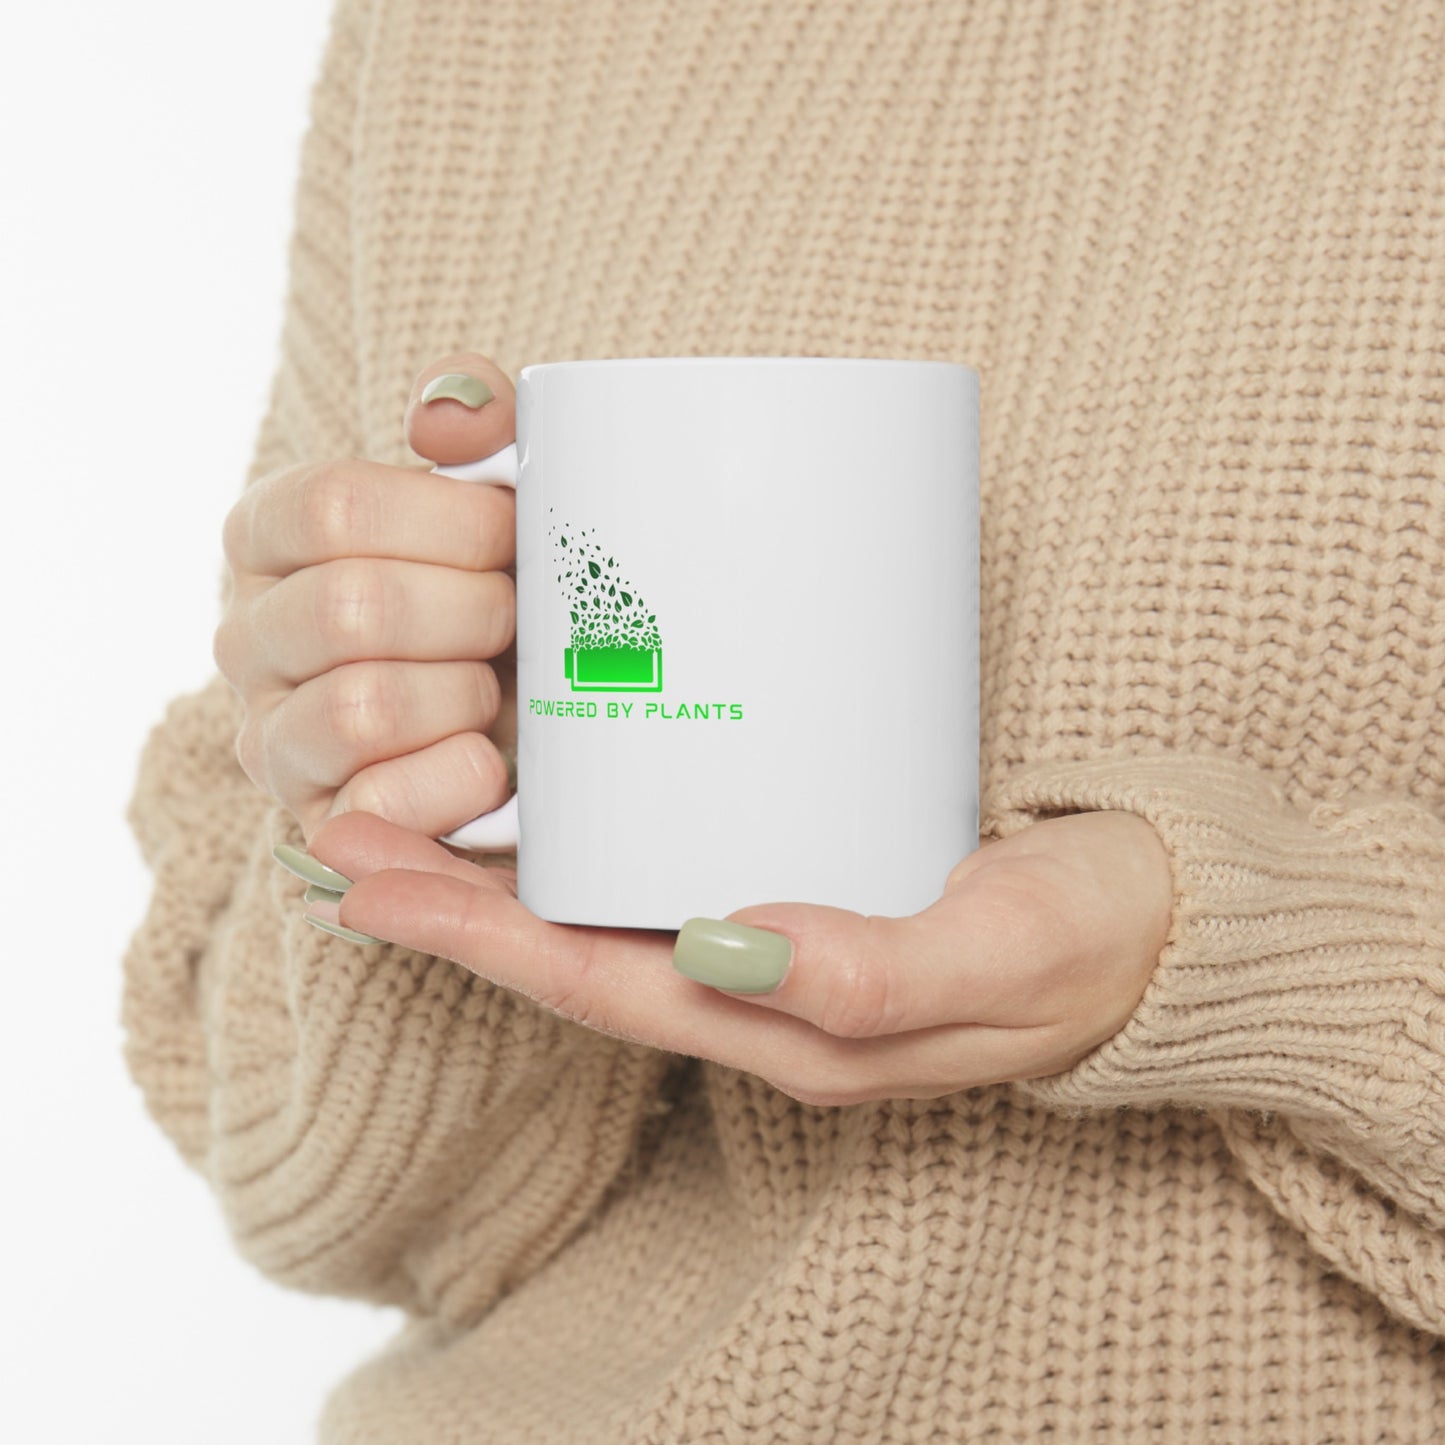 "powered by plants" | Coffee Mug